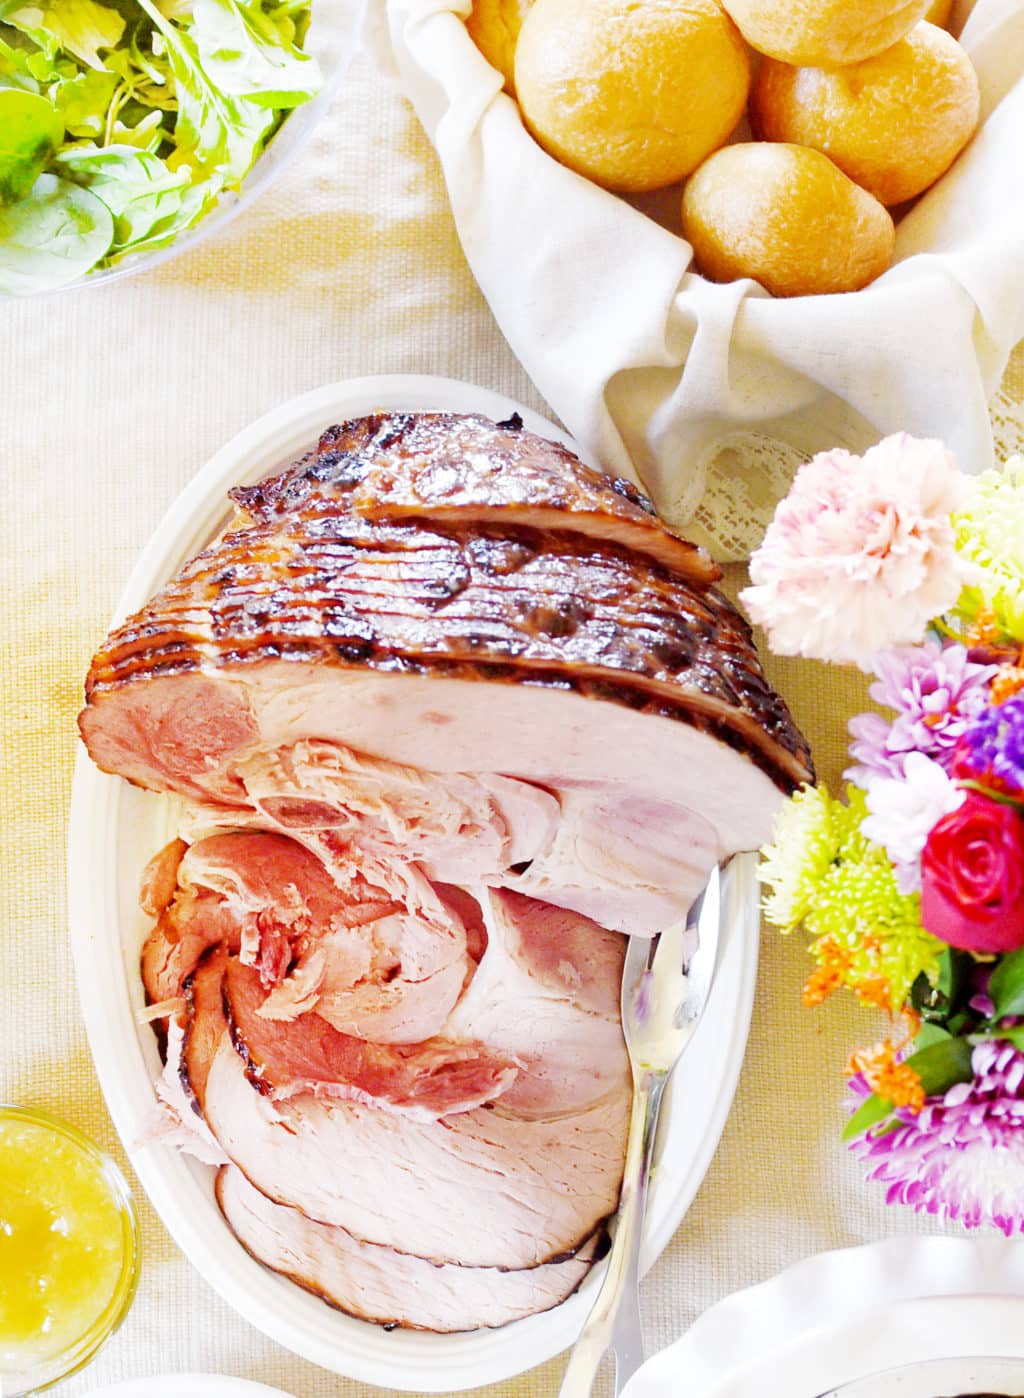 A sliced ham on a plate